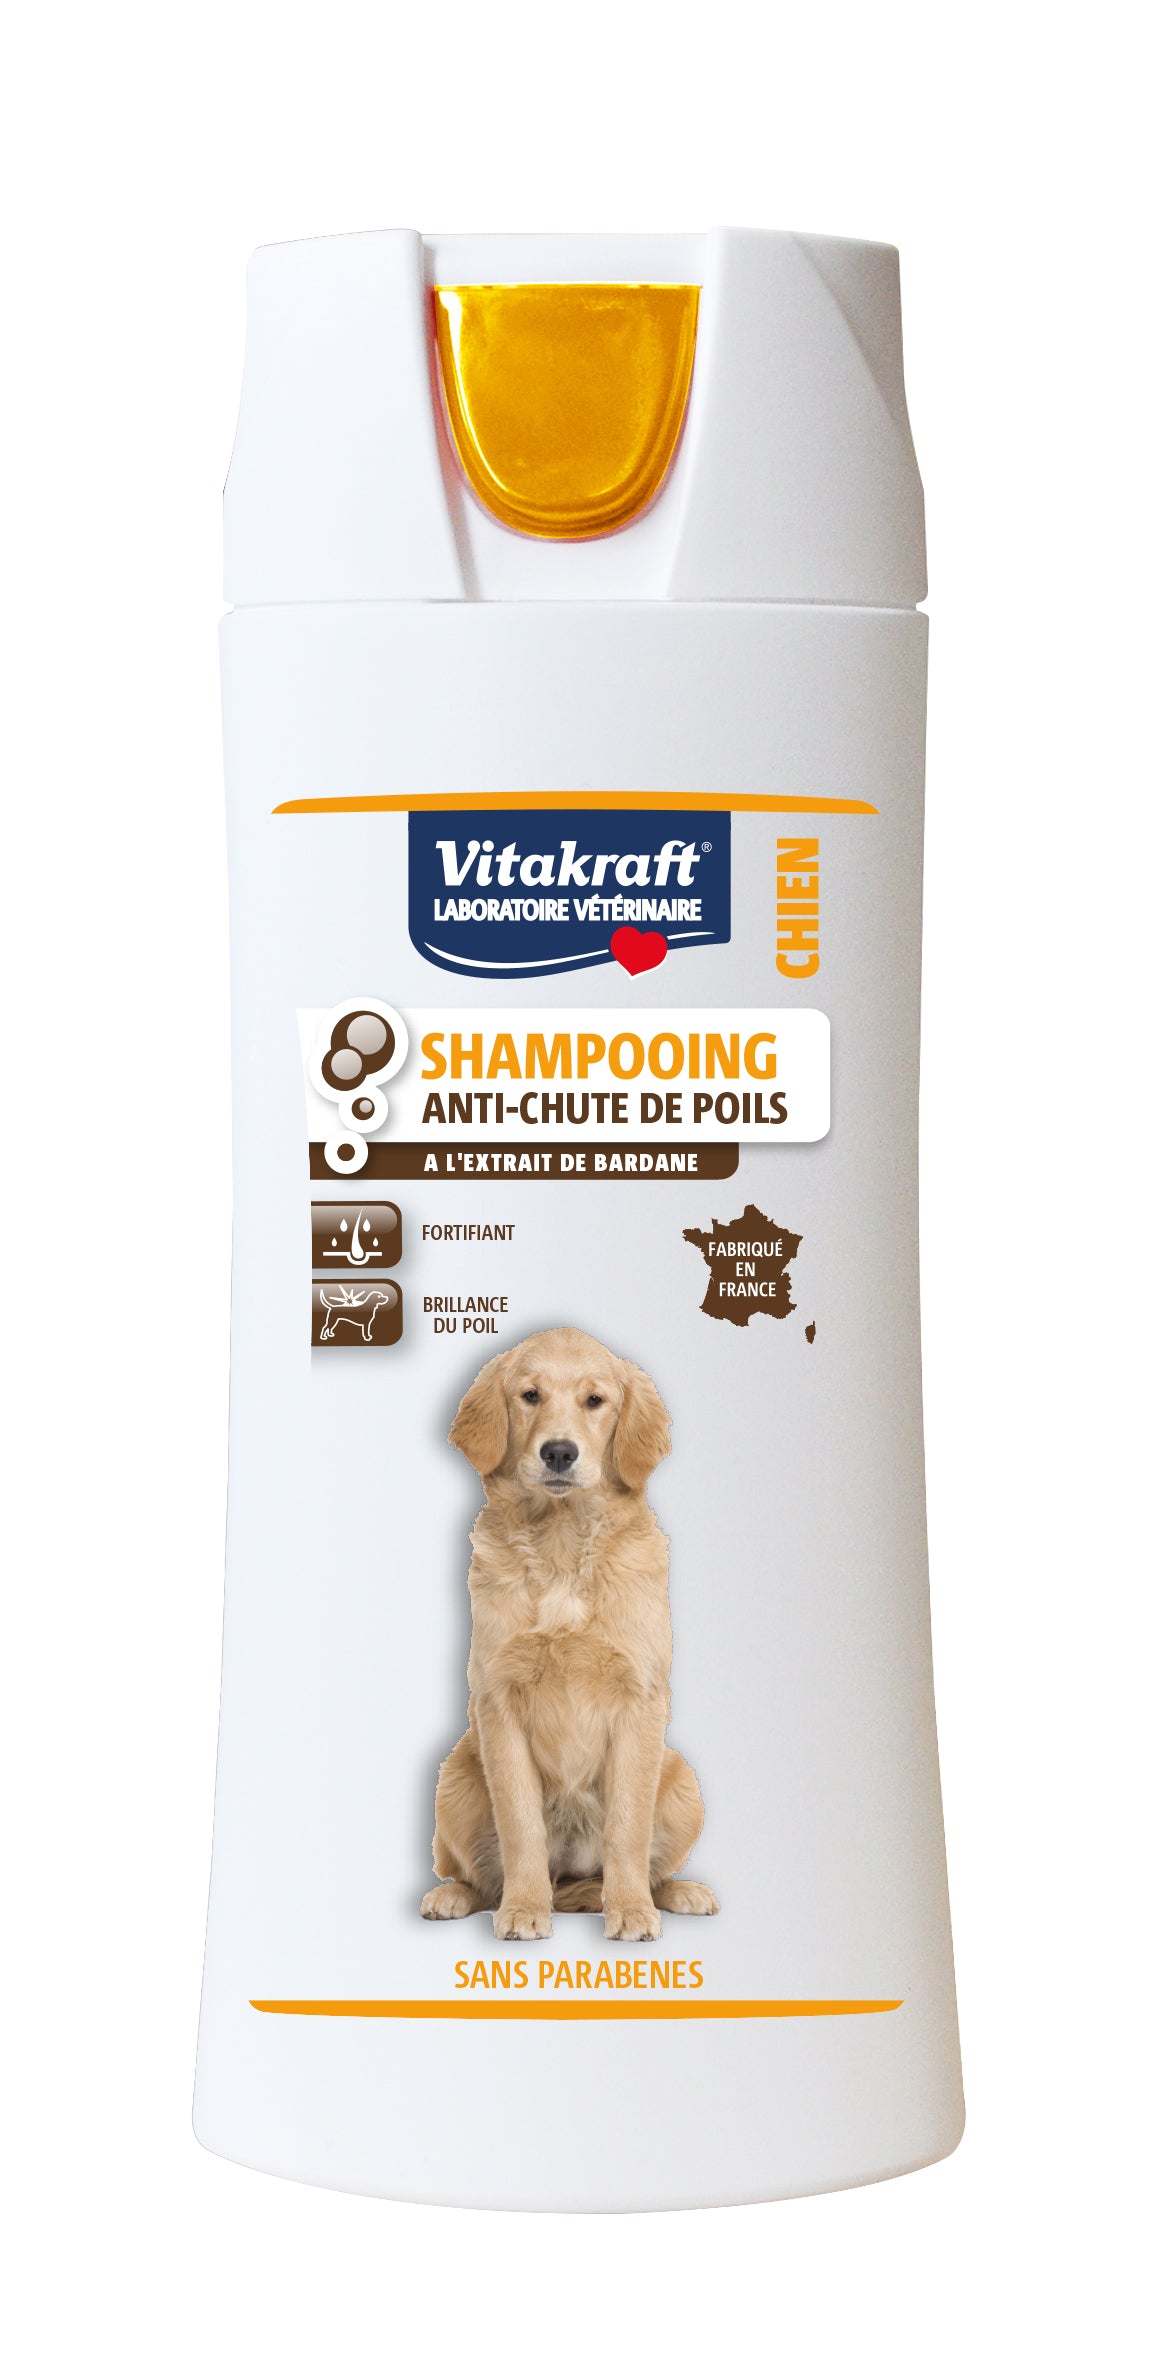 Shampooing anti-chute de poils de Vitakraft